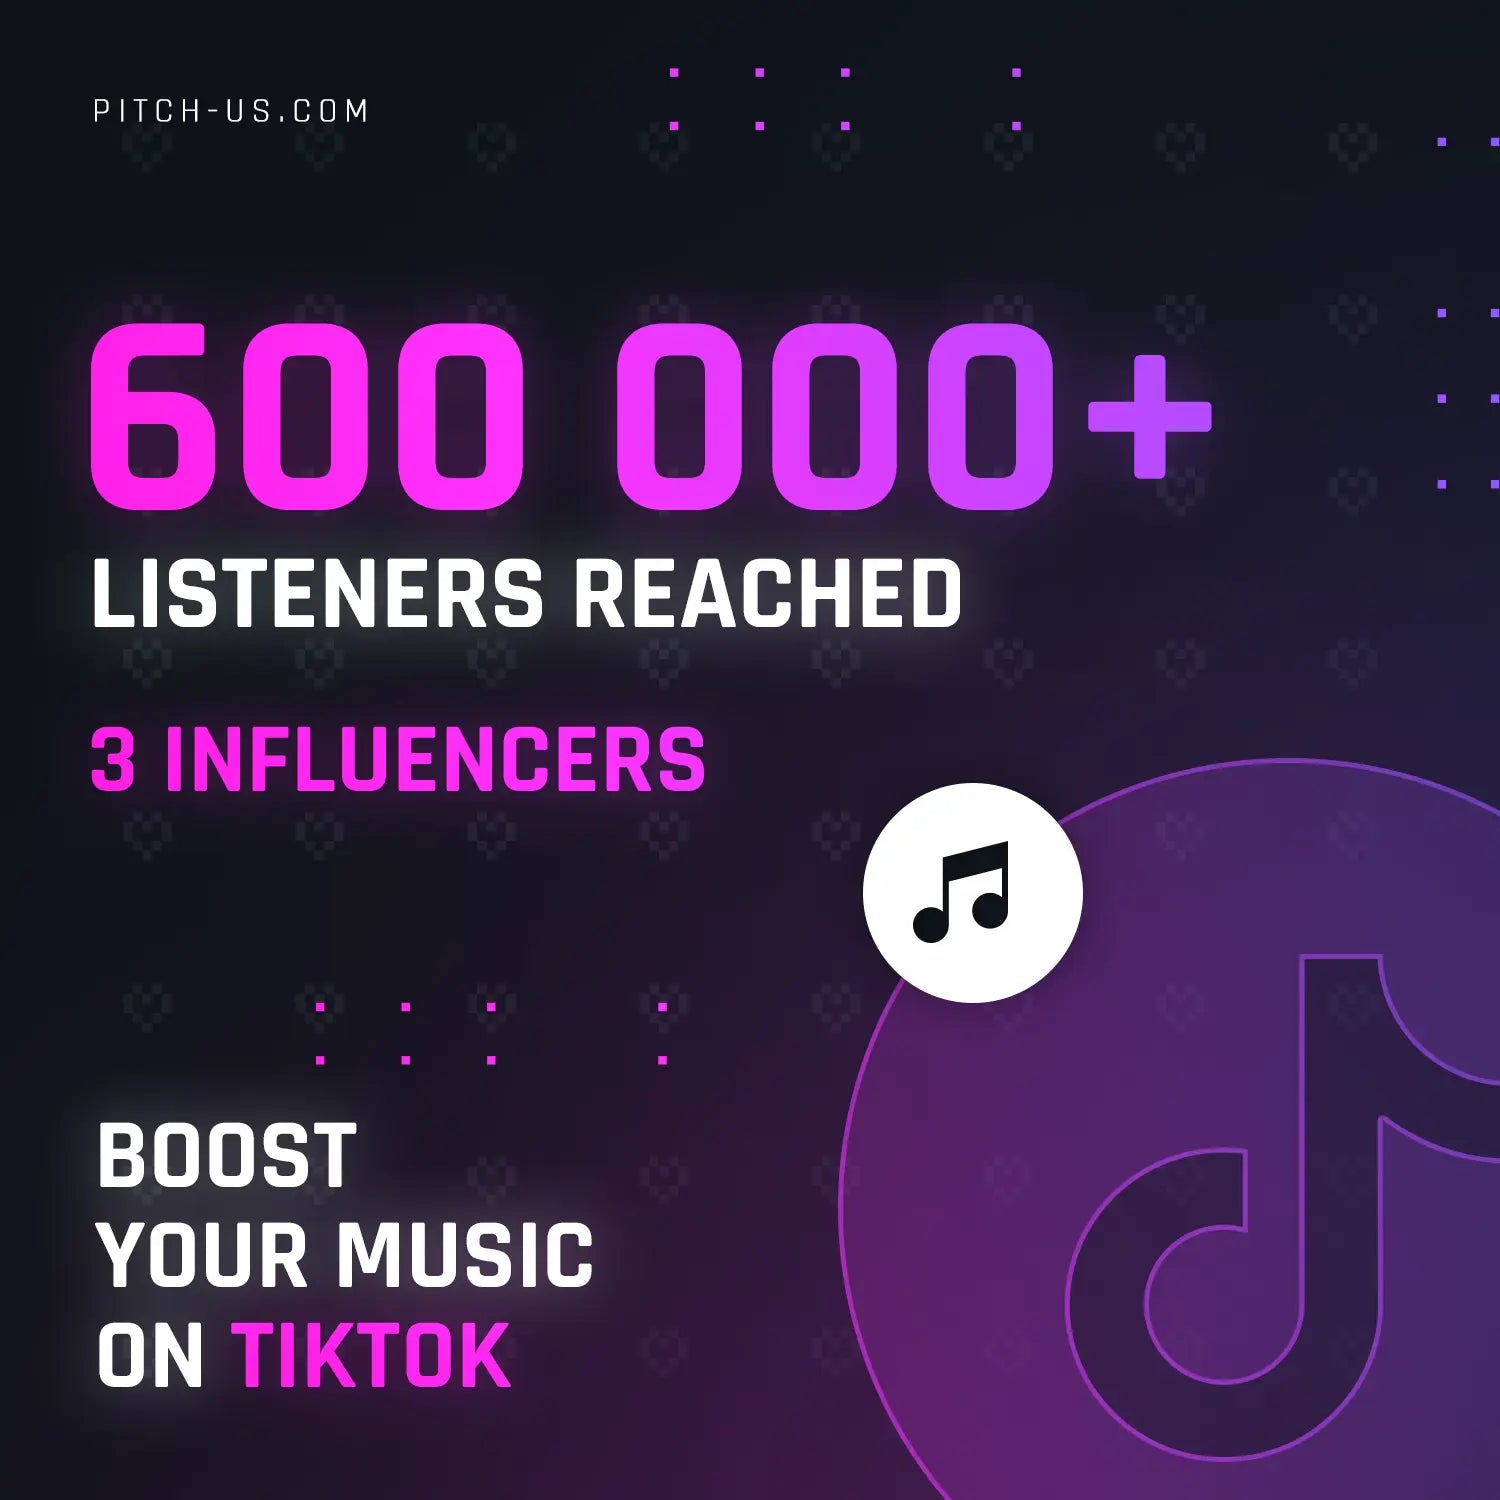 TikTok Viral (600,000+ Listeners) Pitch-Us